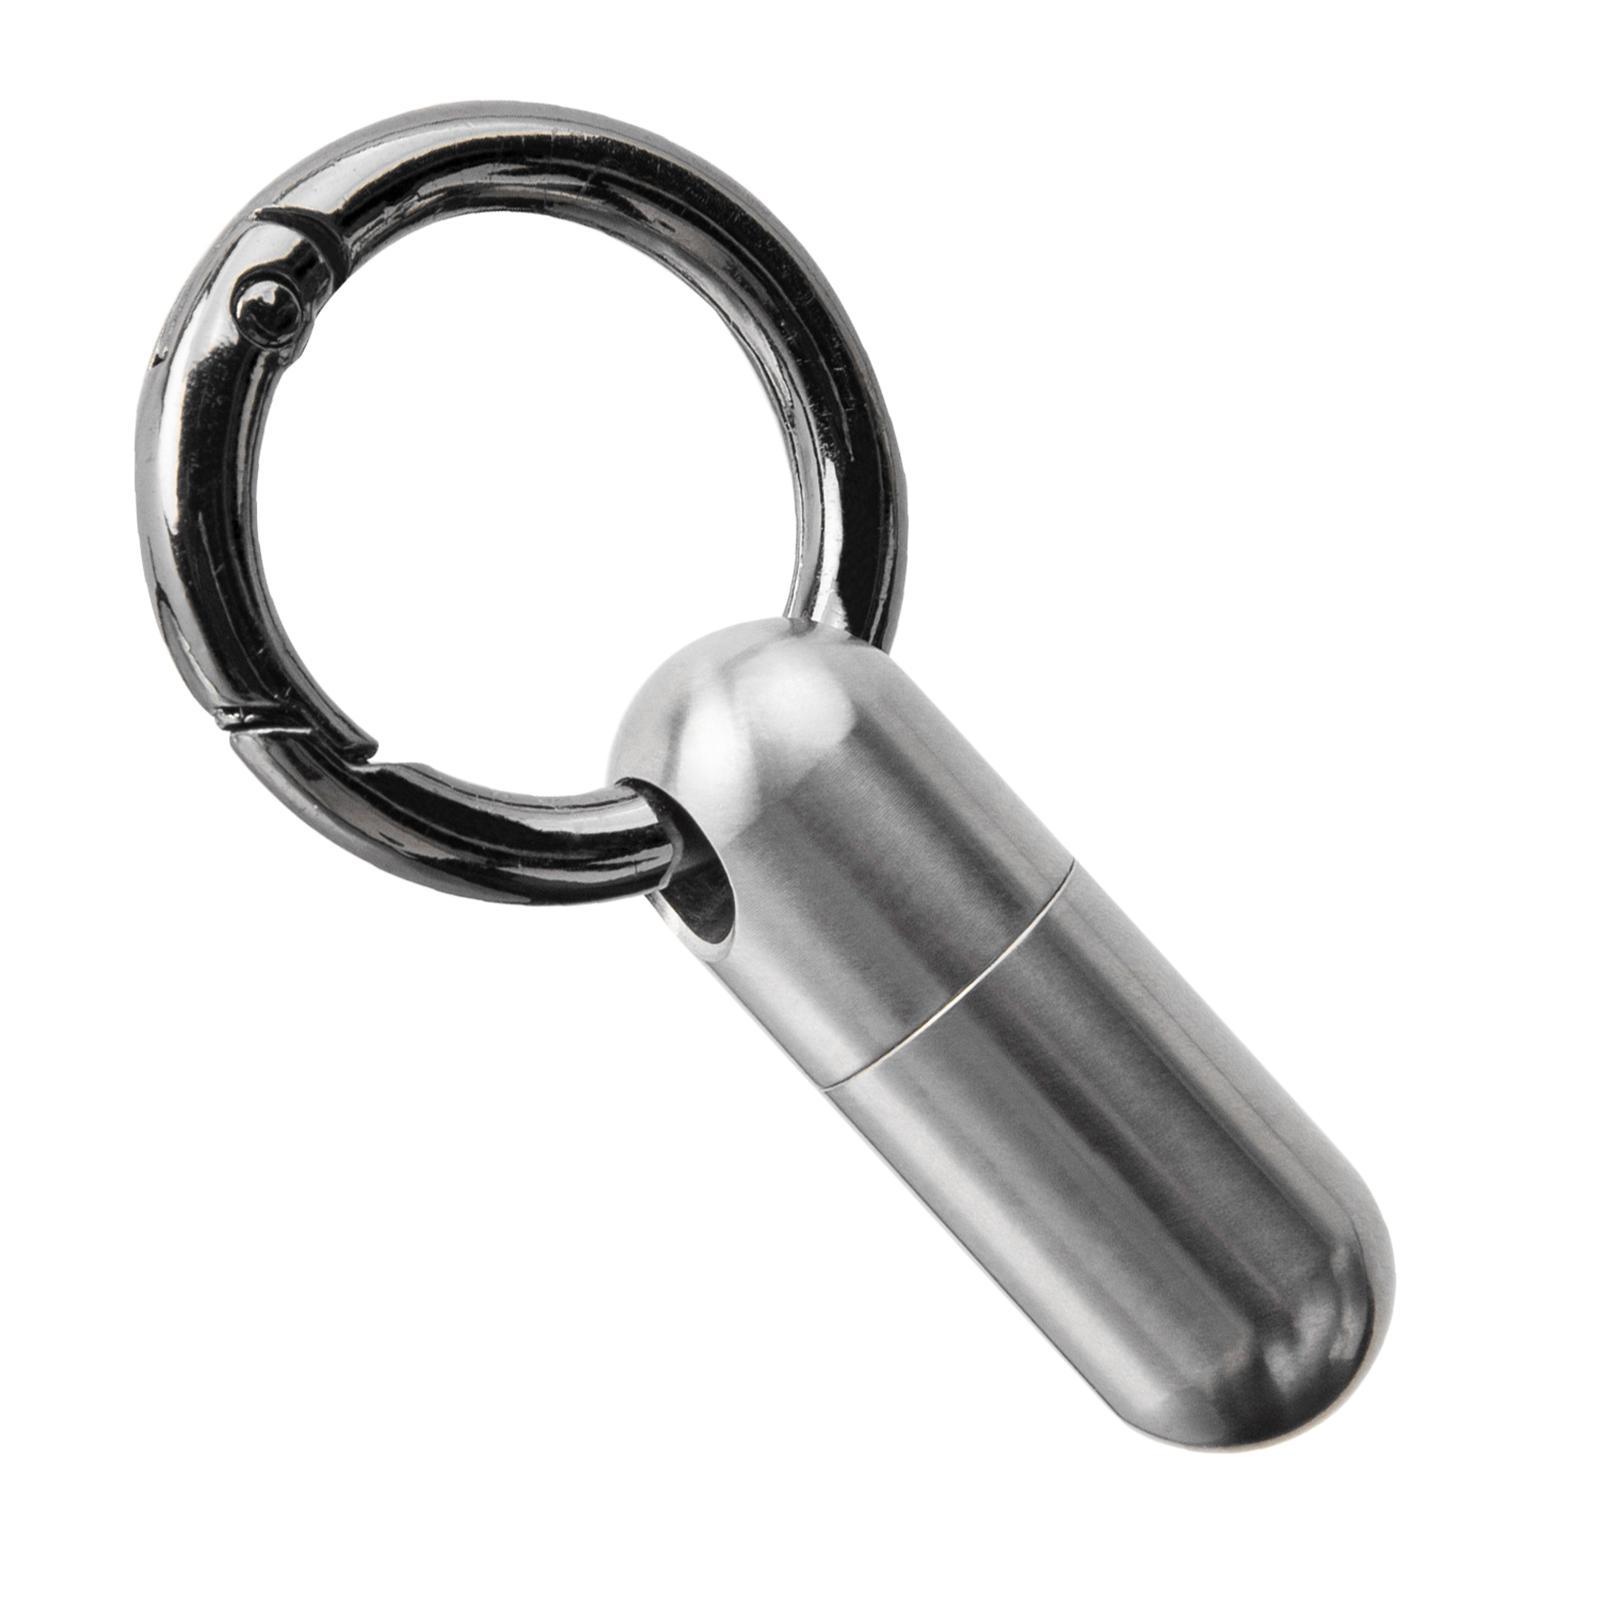 Titanium  Case  Holder  Fob Pendant Metal Tube Small  Box Keychain  Bottle for Traveling Hiking Camping Pocket Men Women